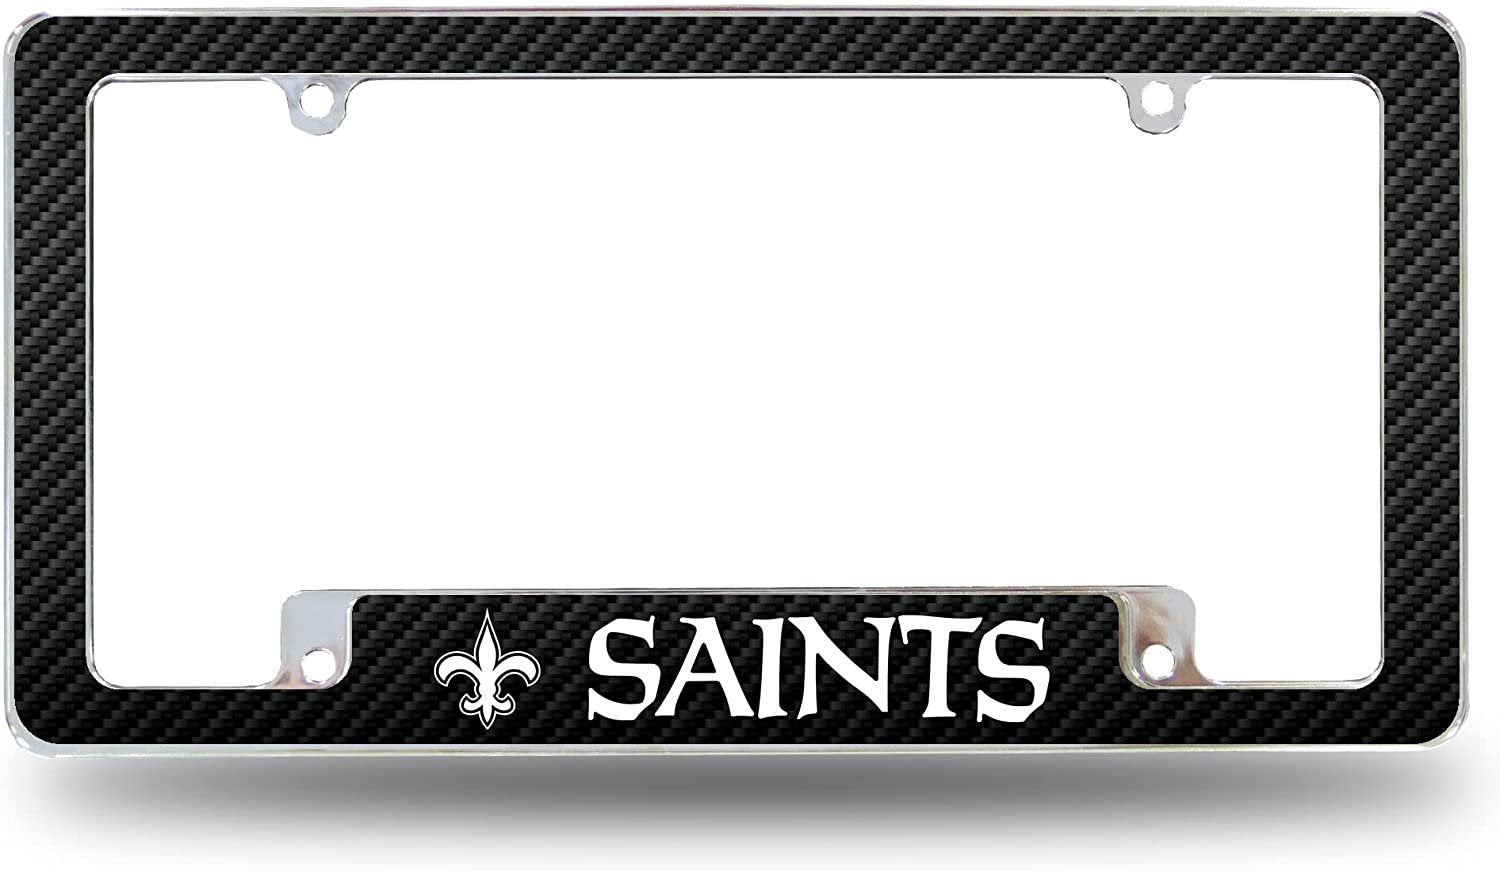 New Orleans Saints Metal License Plate Frame Tag Cover Carbon Fiber Design 12x6 Inch